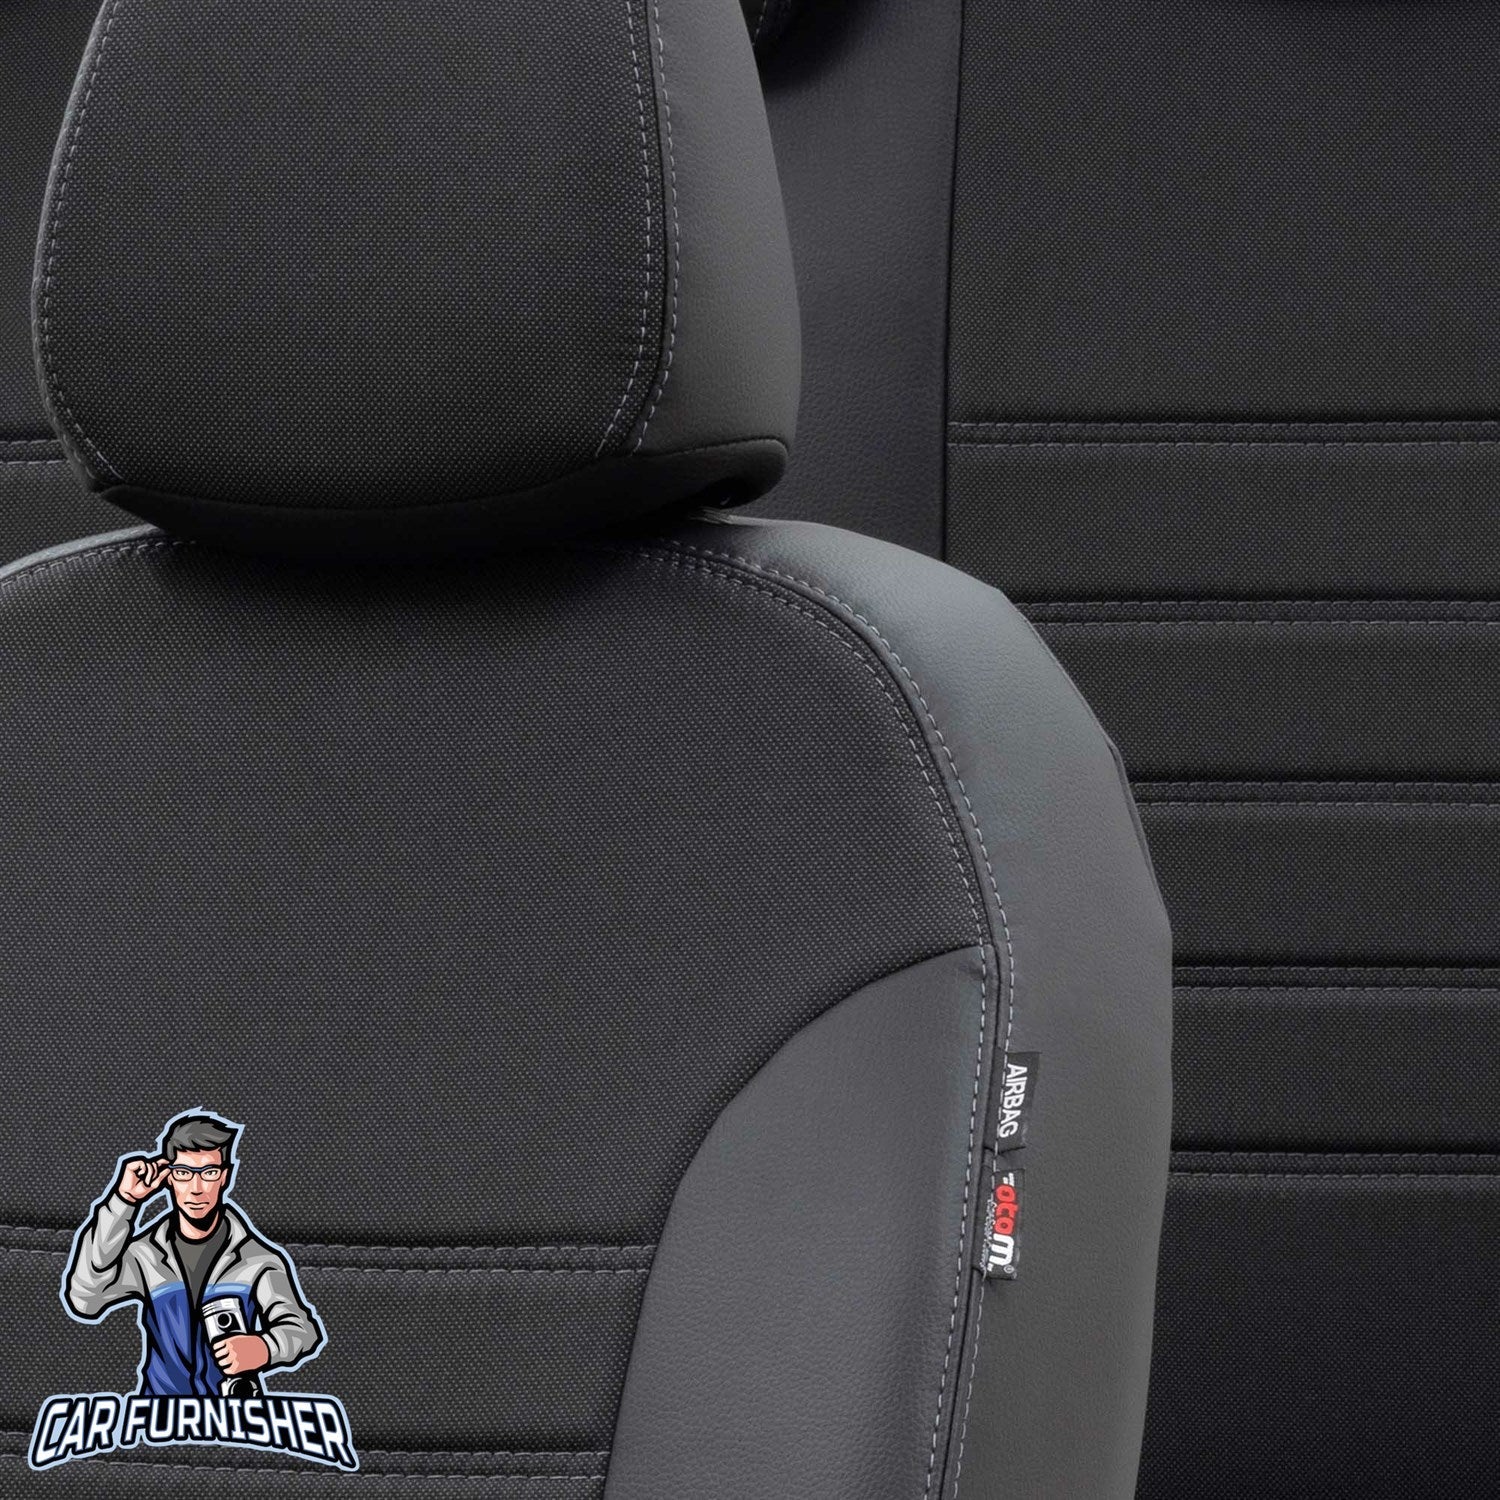 Mercedes X-Class Seat Covers Paris Leather & Jacquard Design Black Leather & Jacquard Fabric